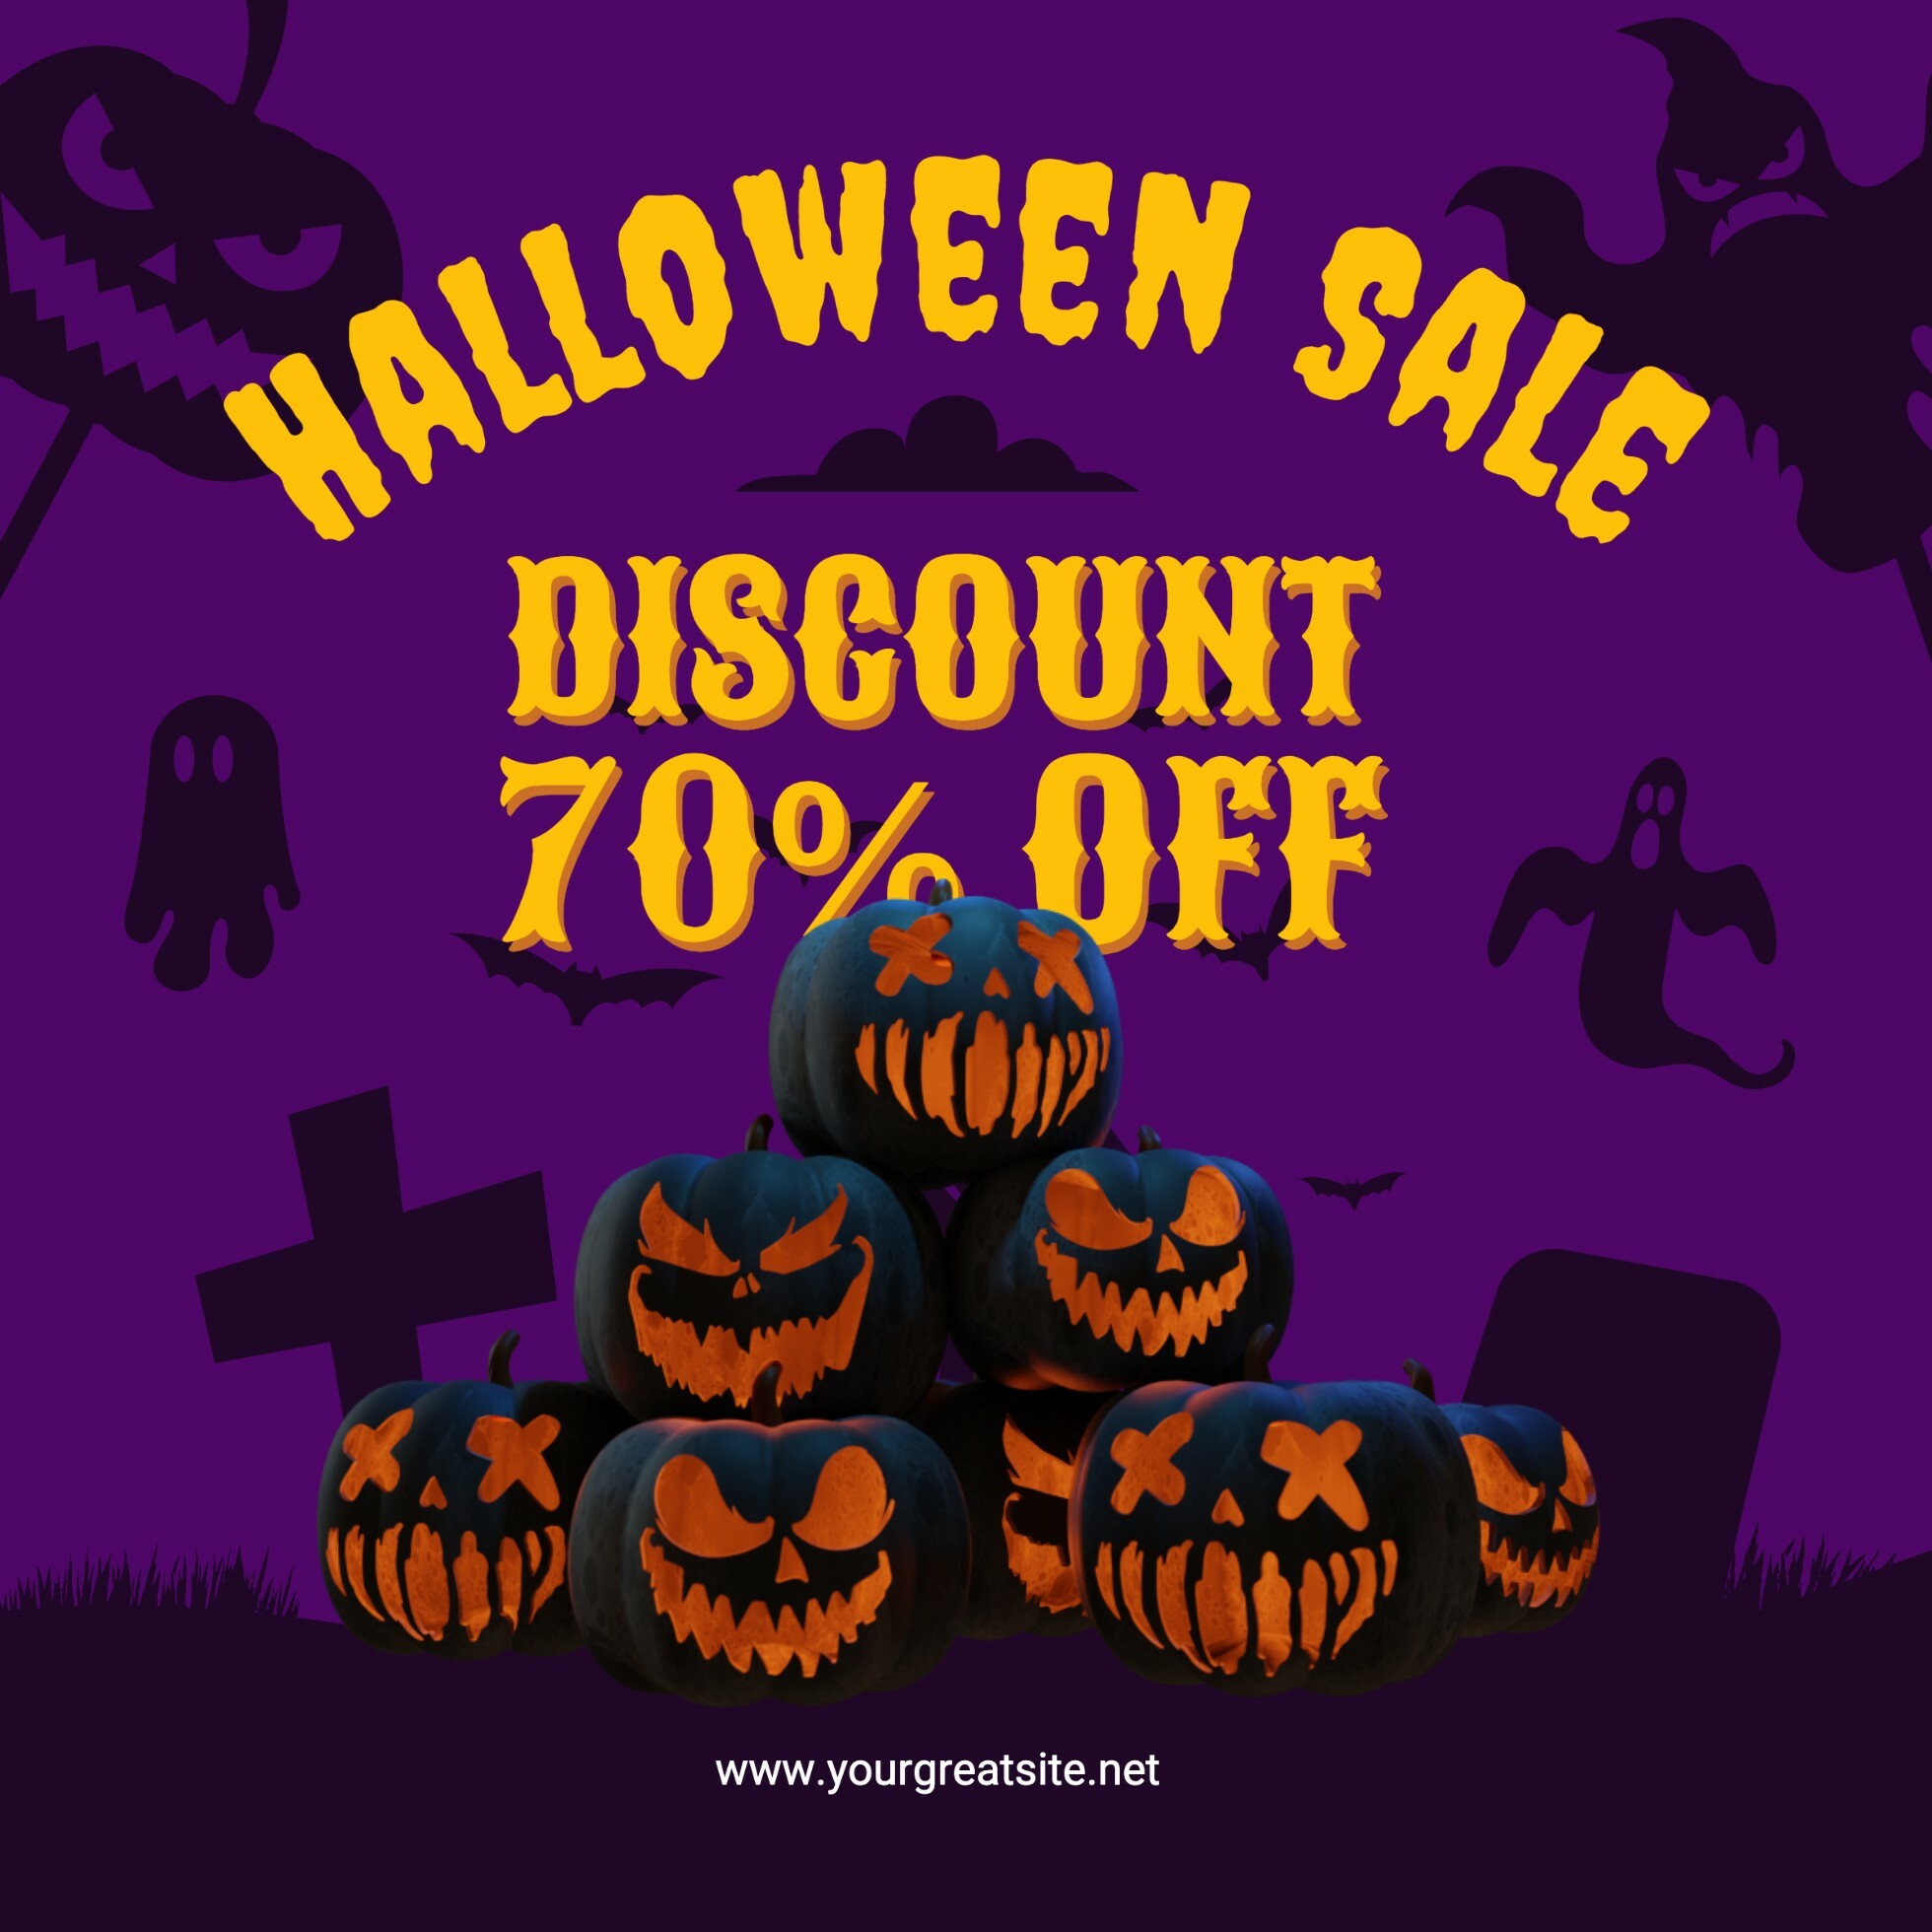 Purple Frightening Halloween Sale Discount LinkedIn Post